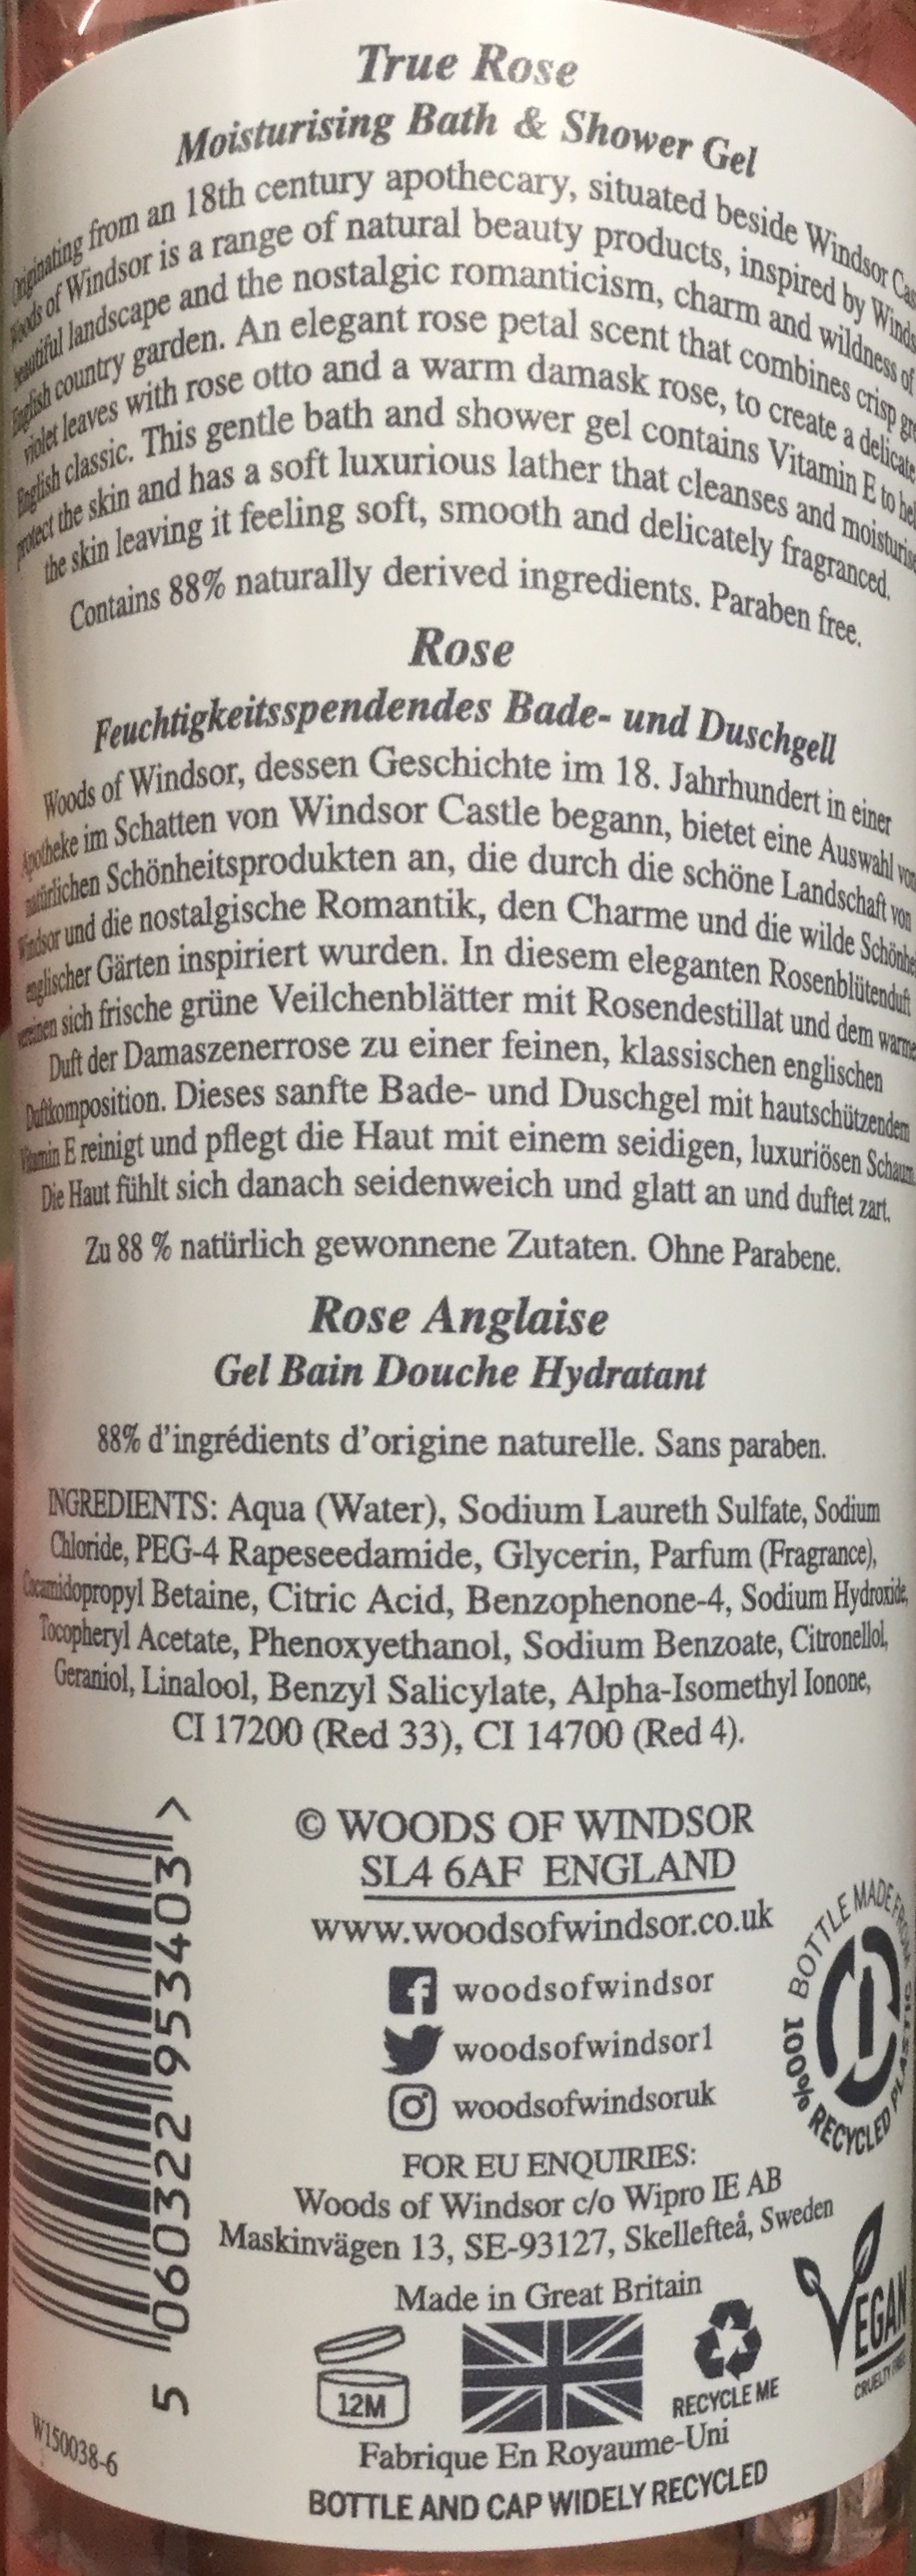 Wahre Rose Bade & Duschgel